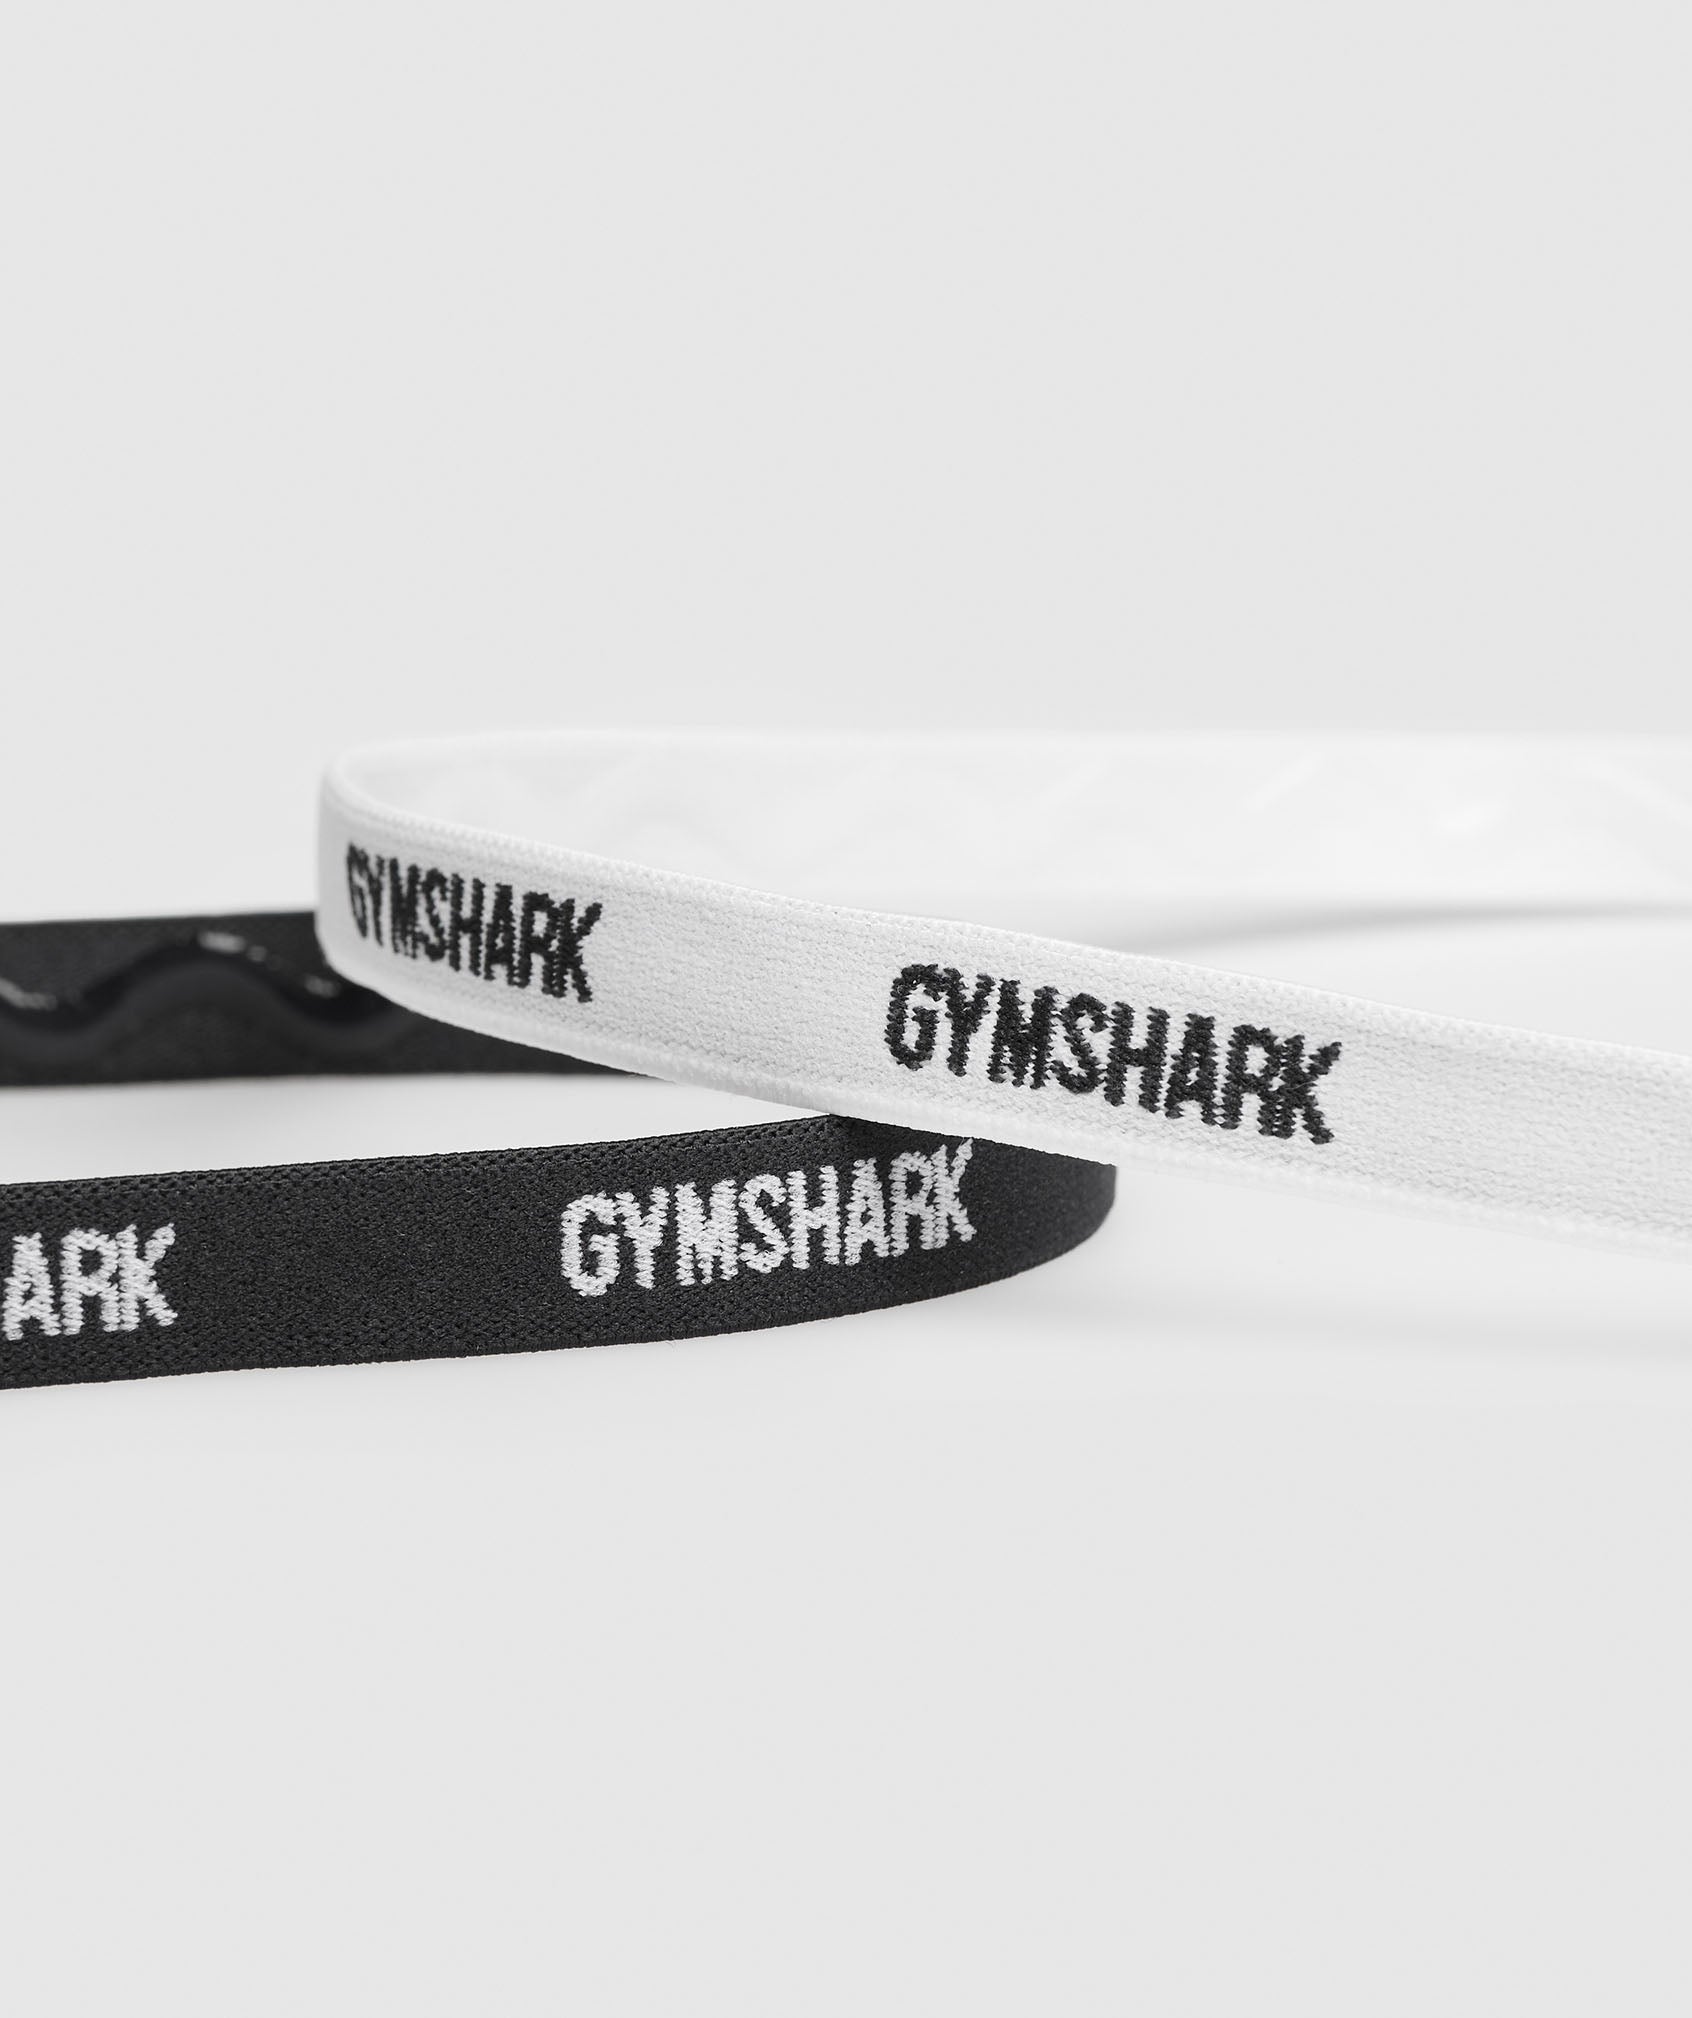 Gymshark New Era Headband One size fits all! Stretch - Depop